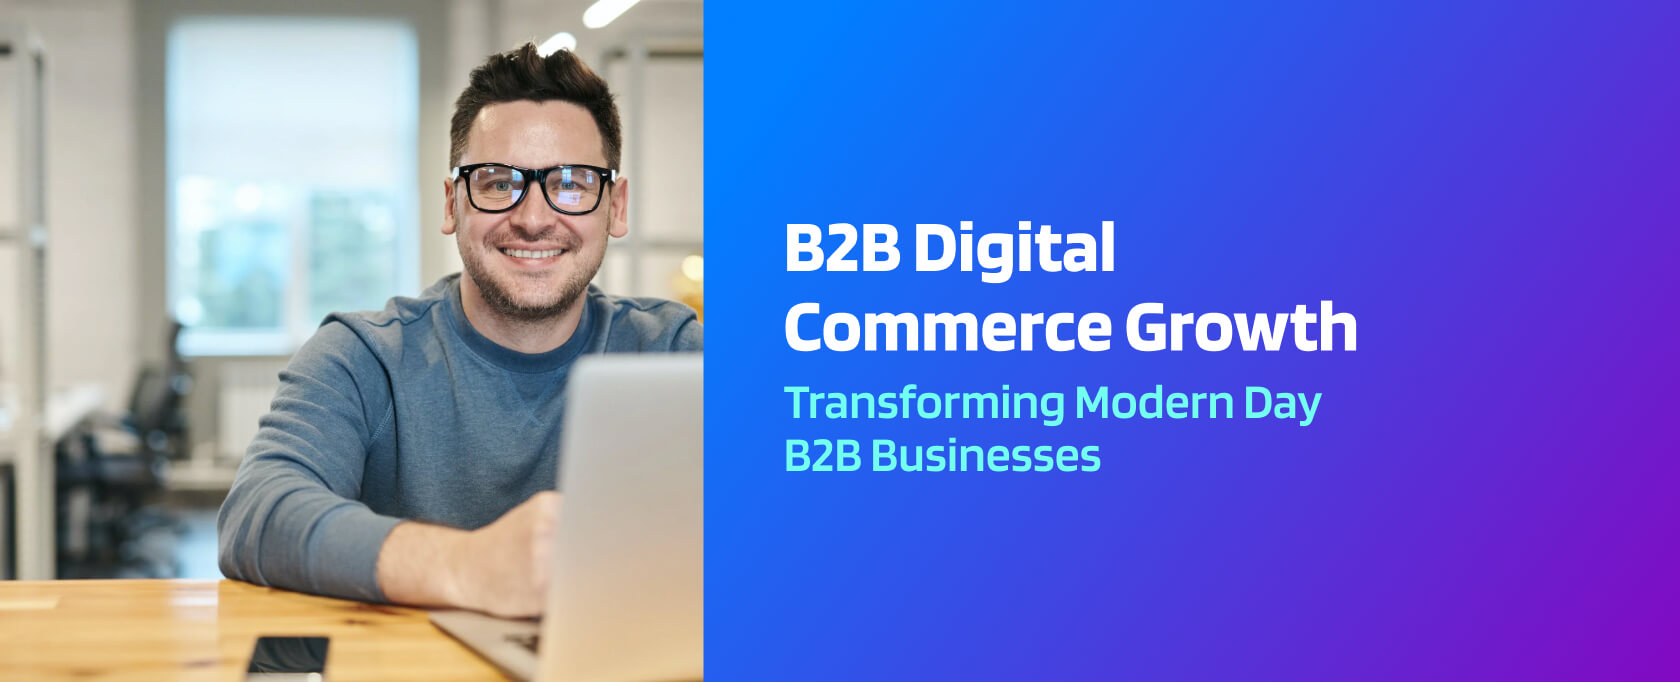 b2b-digital-commerce-growth-featured